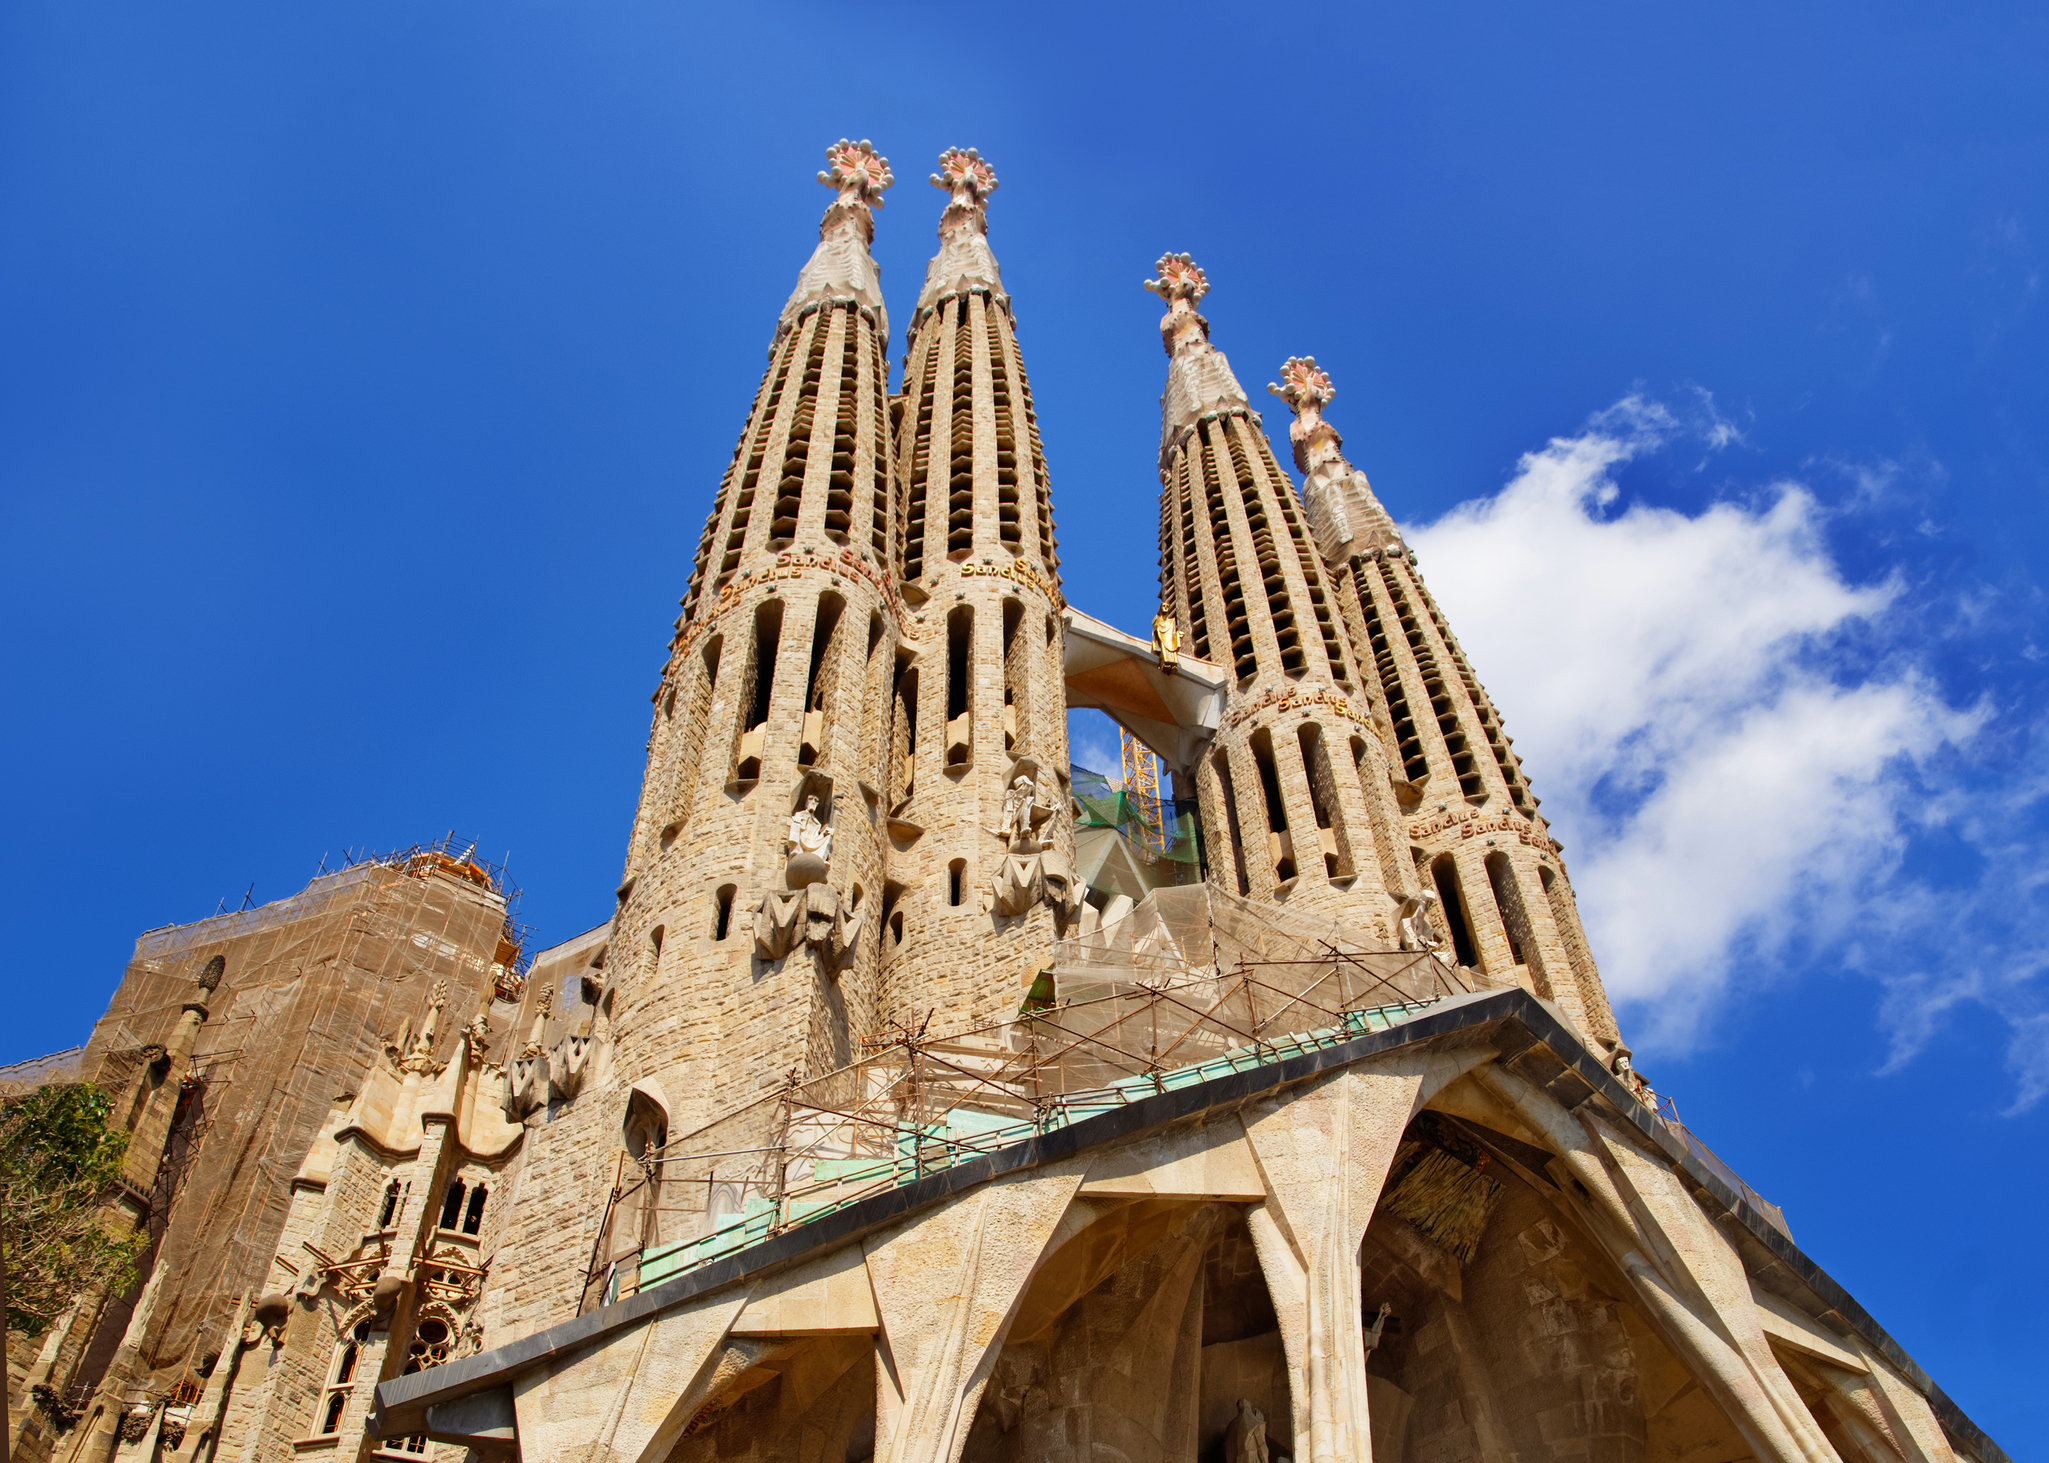 Steeples-of-Sagrada-Familia-in-Barcelona-in-Spain-564583788_2052x1466.jpeg